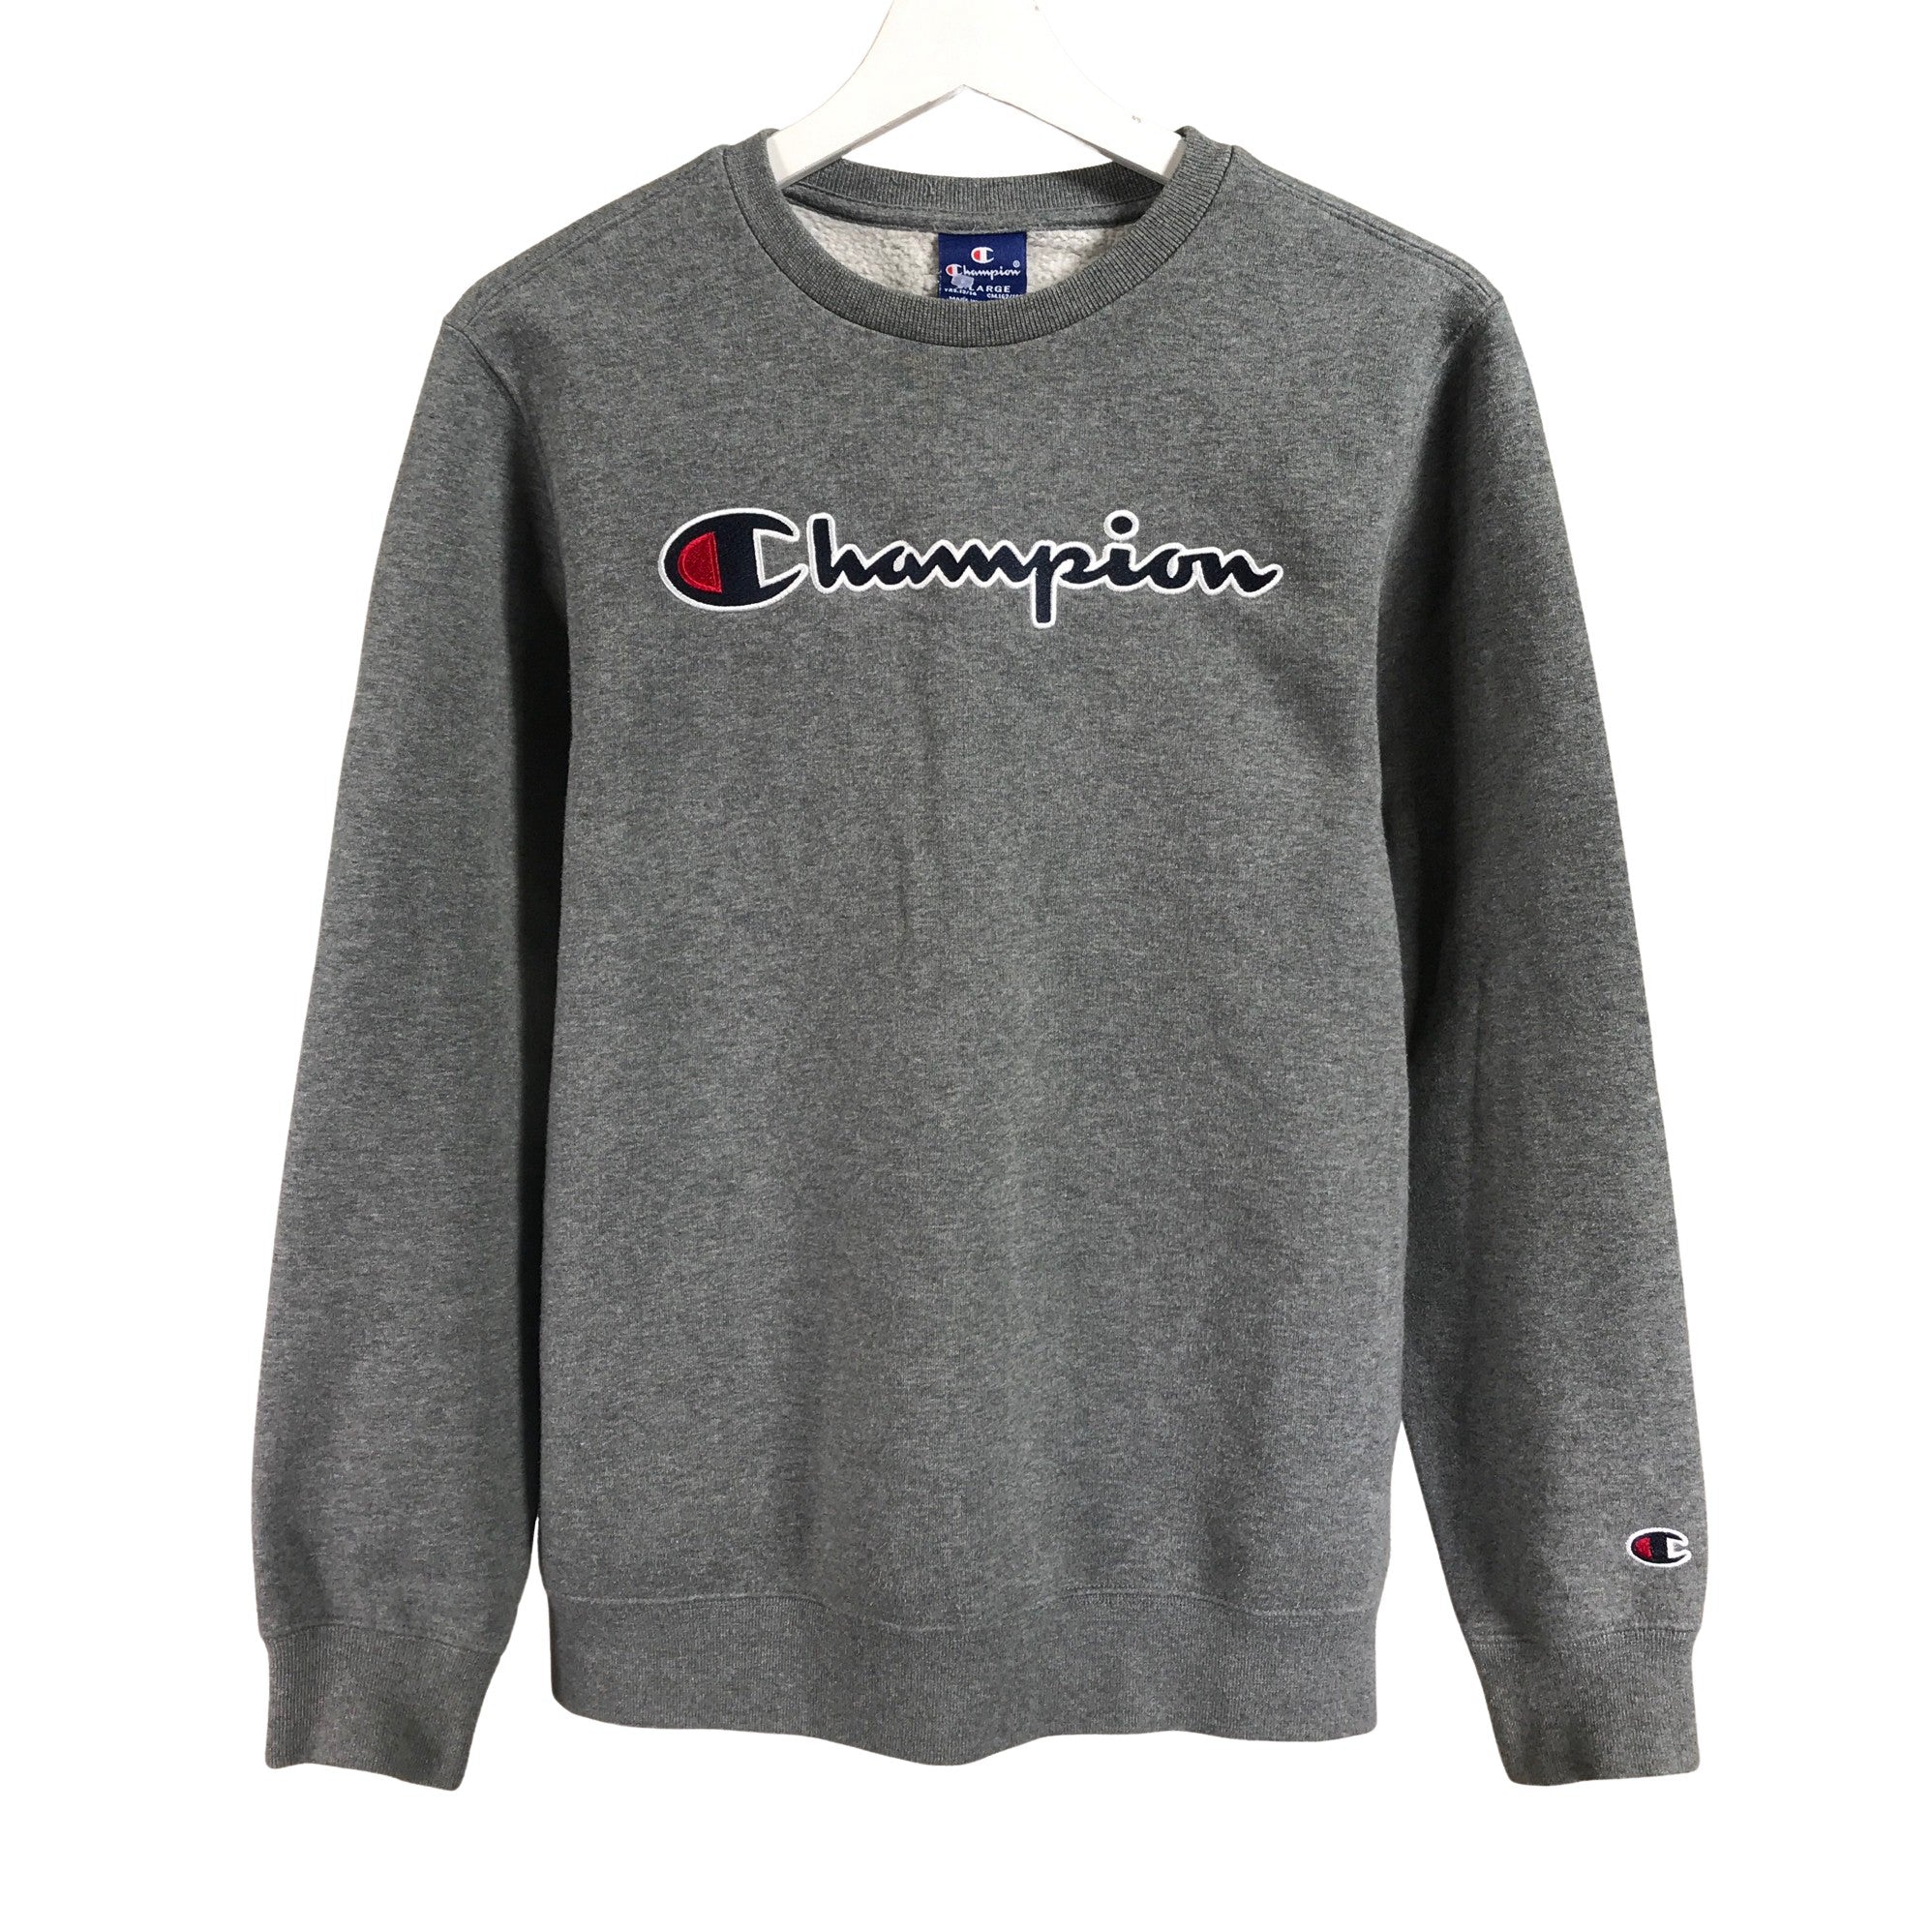 Champion Sweatshirt, size 158 - (Grey) Emmy